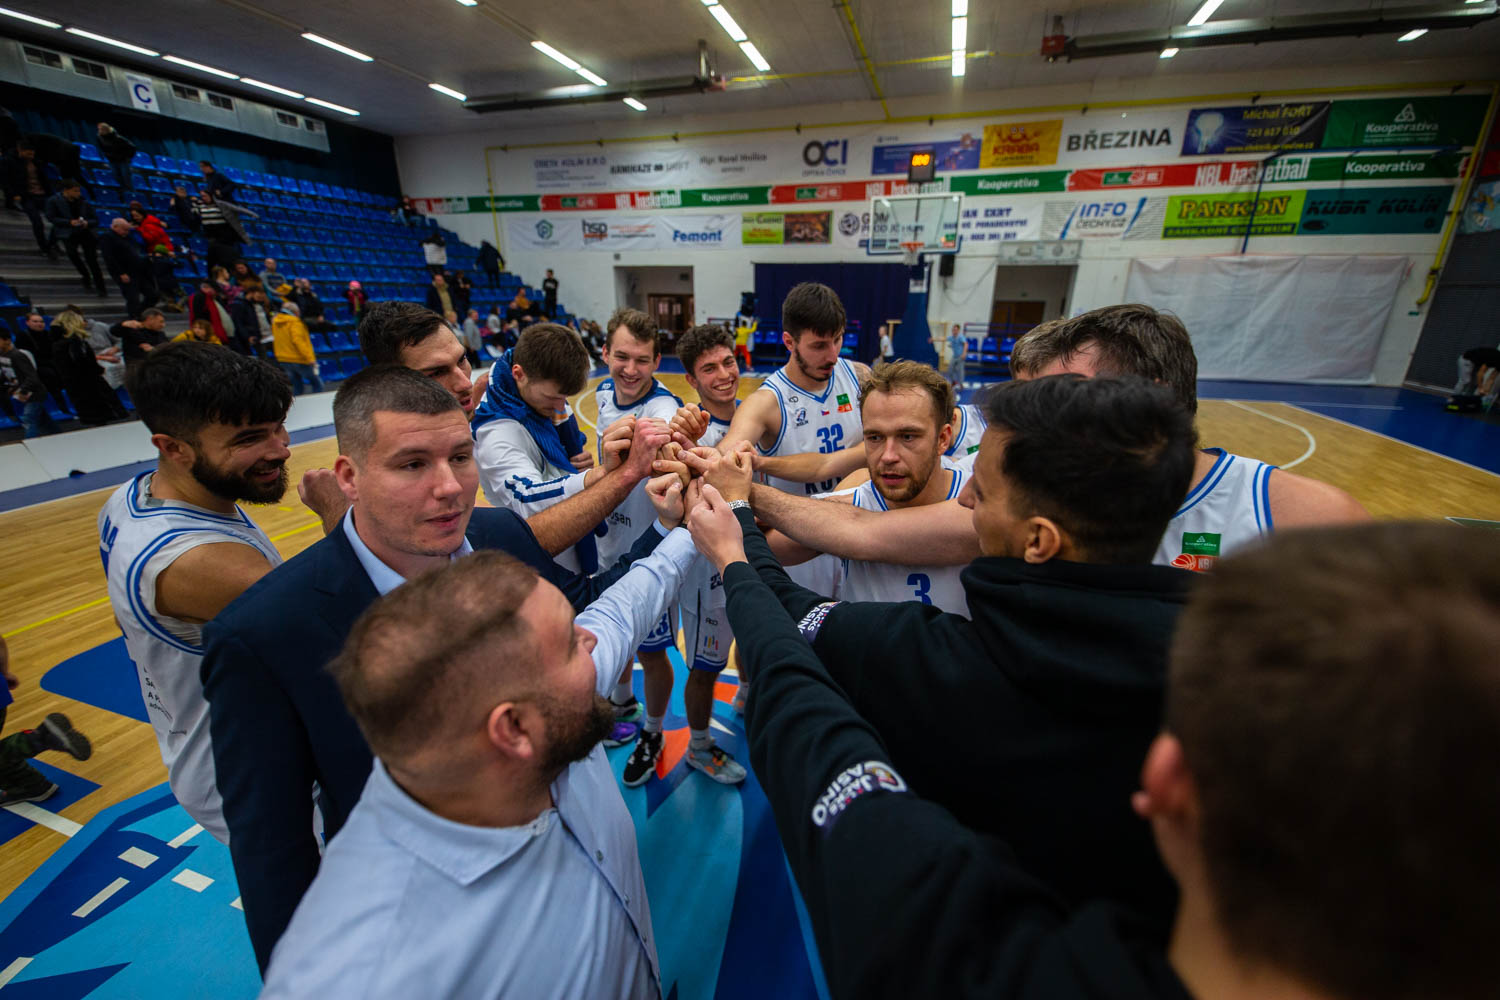 Kolín advances to the quarter-finals after drama with Škrljevo